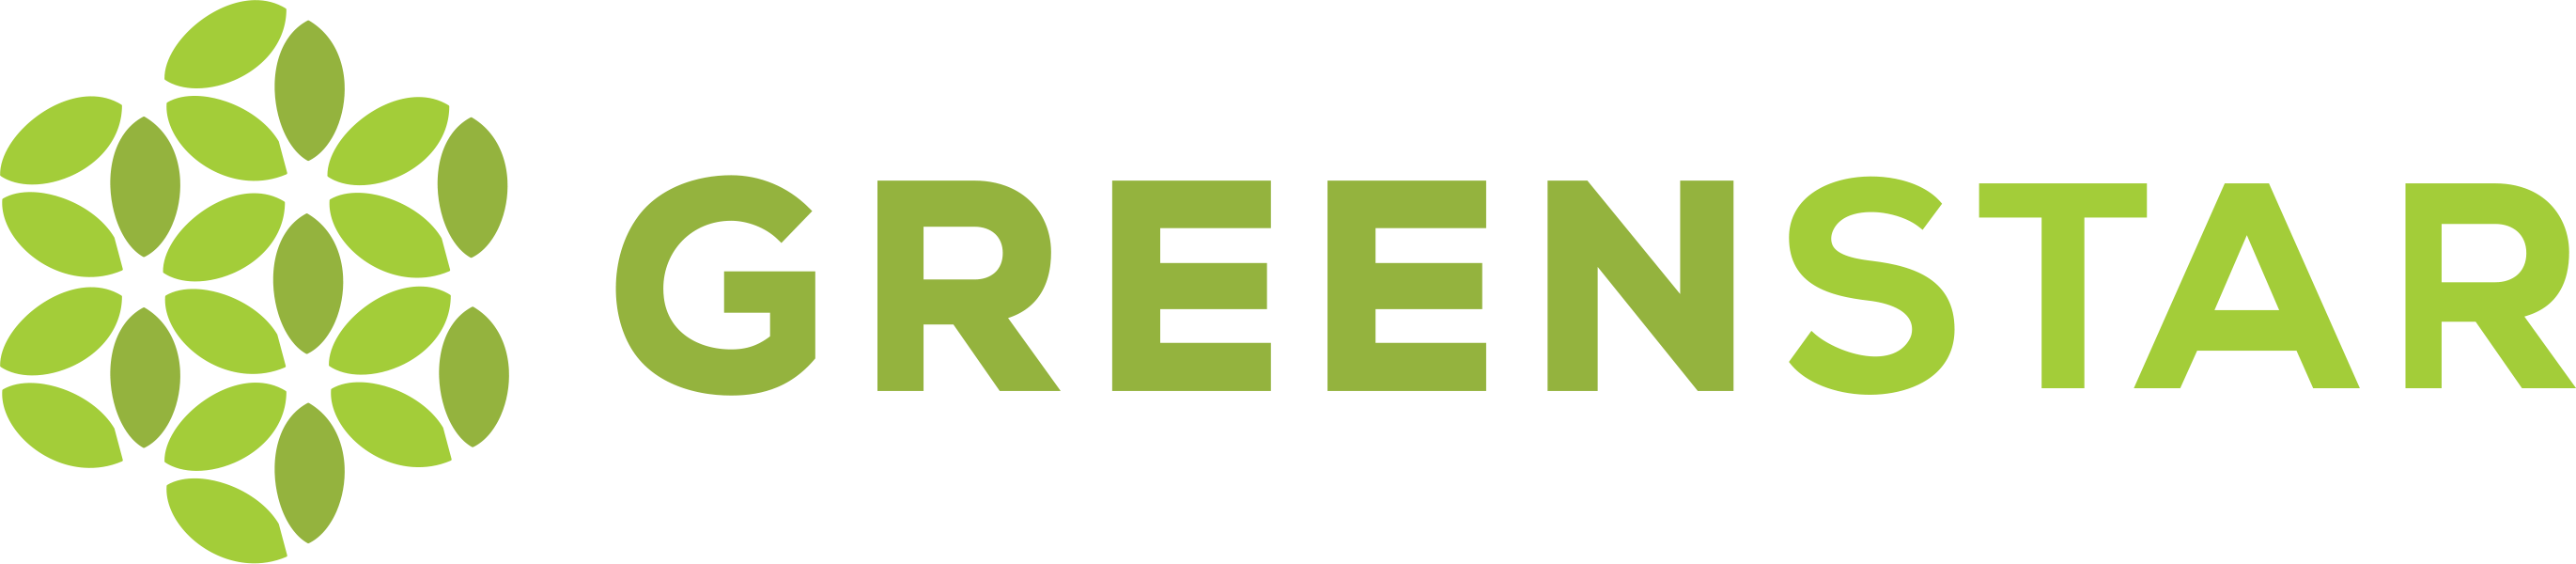 Green Star Logo - Home New - Greenstar LED